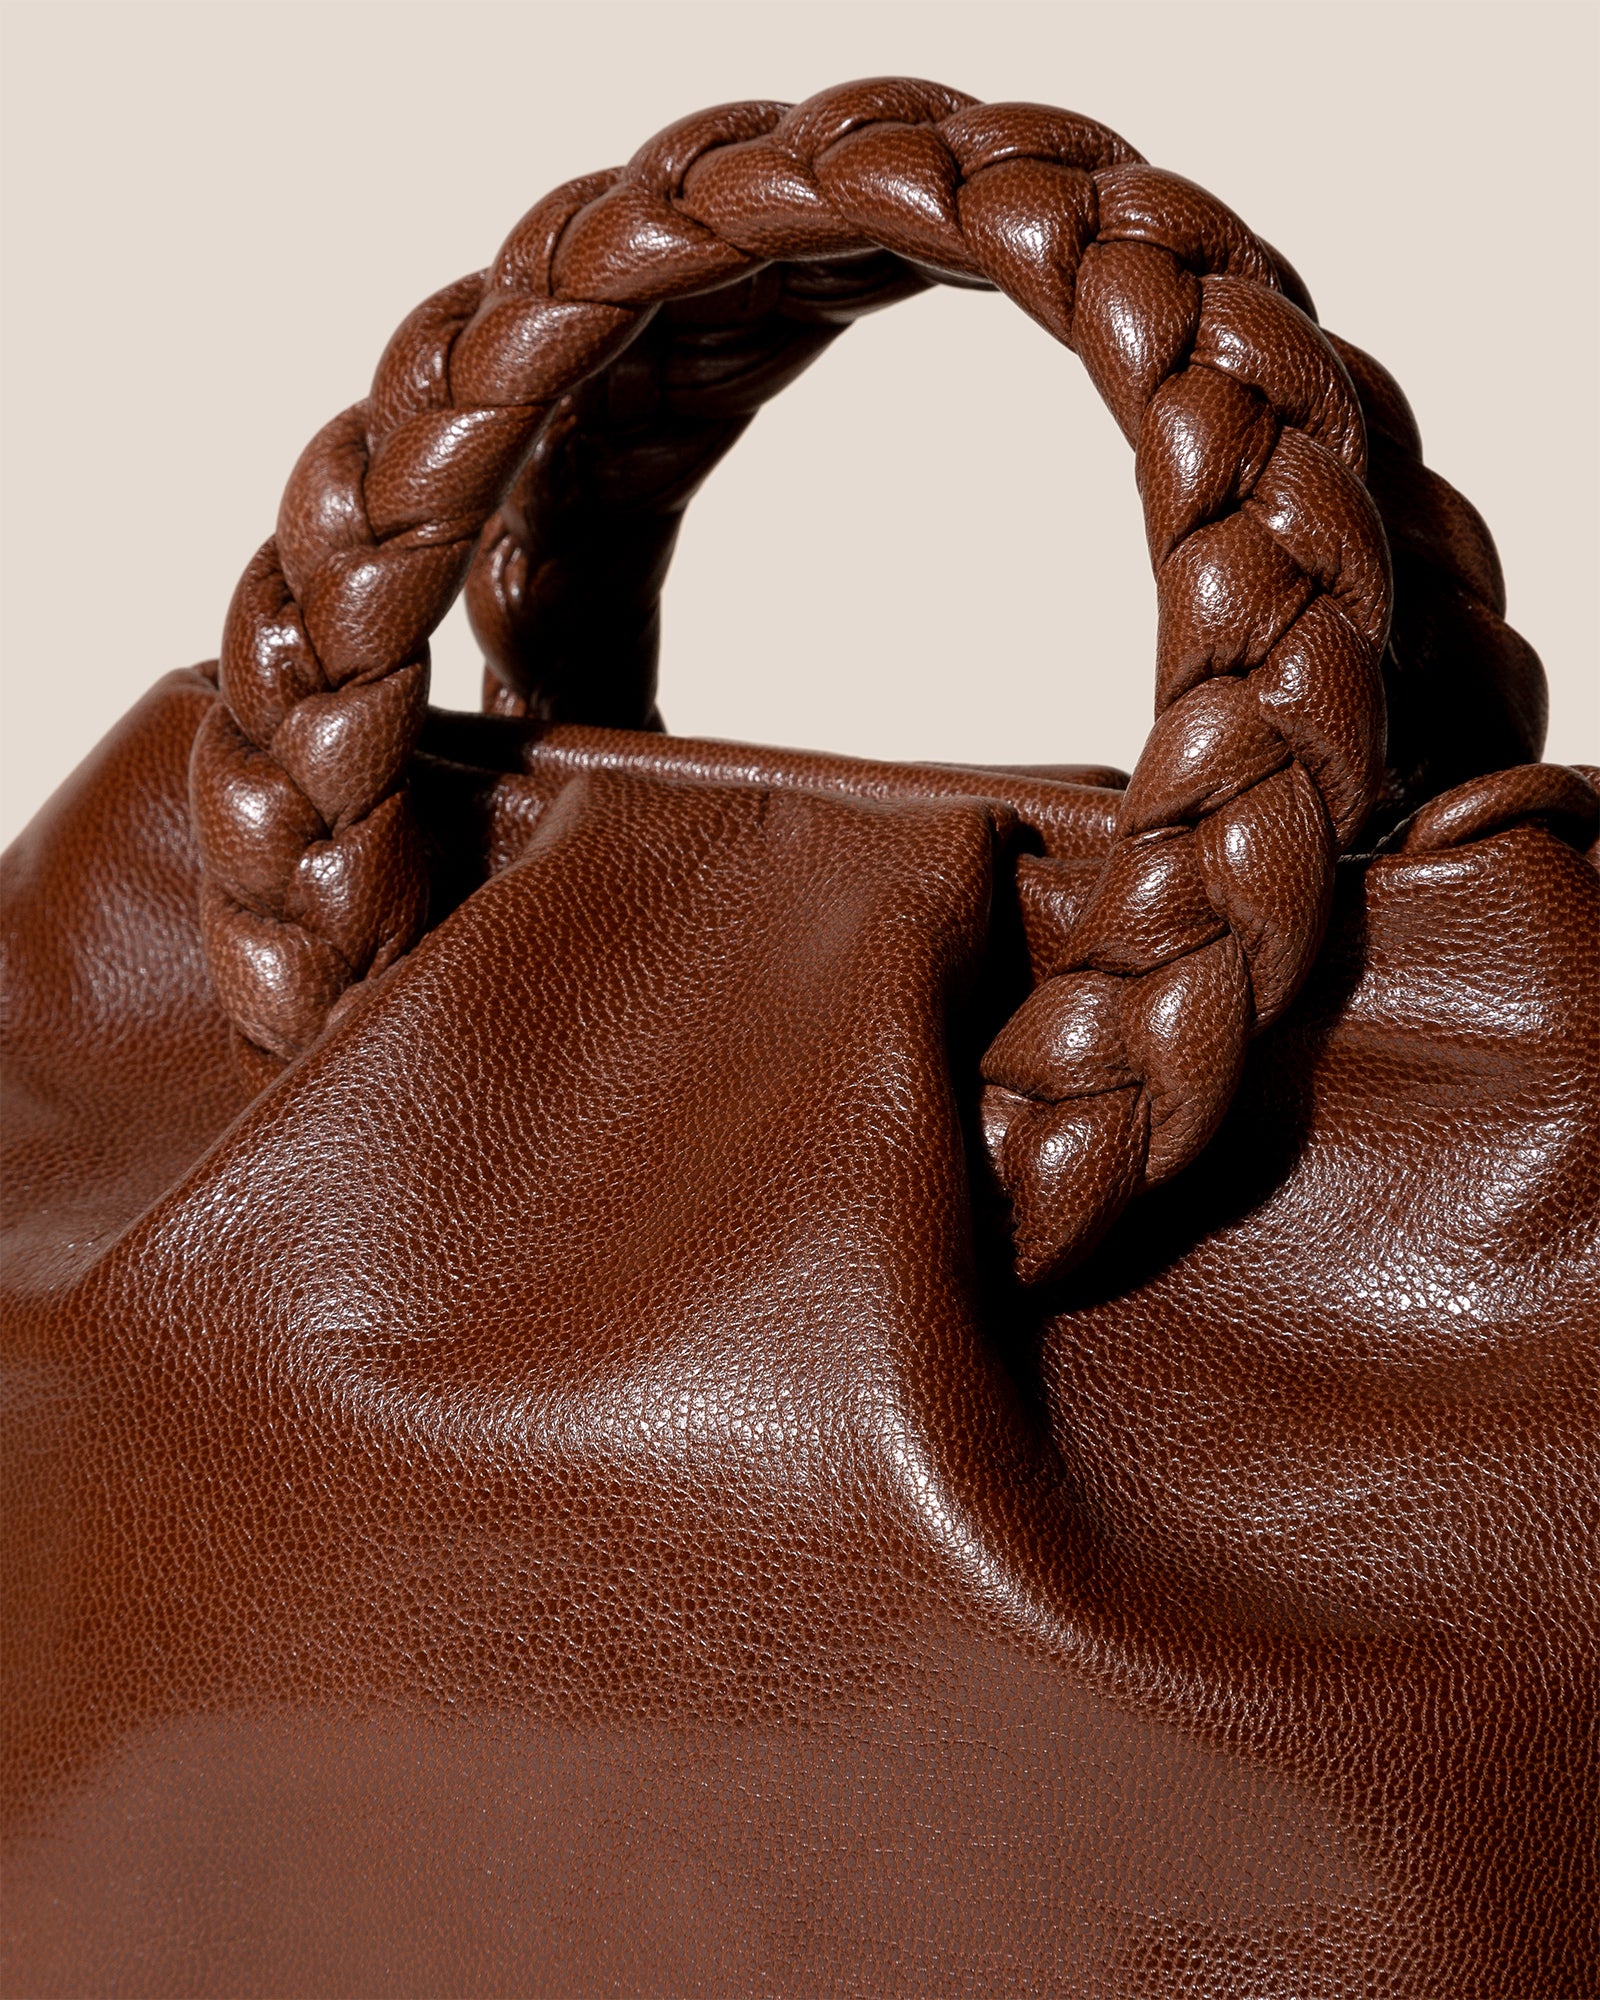 Aspinal Mayfair Bags | Leather Handbags | Aspinal of London